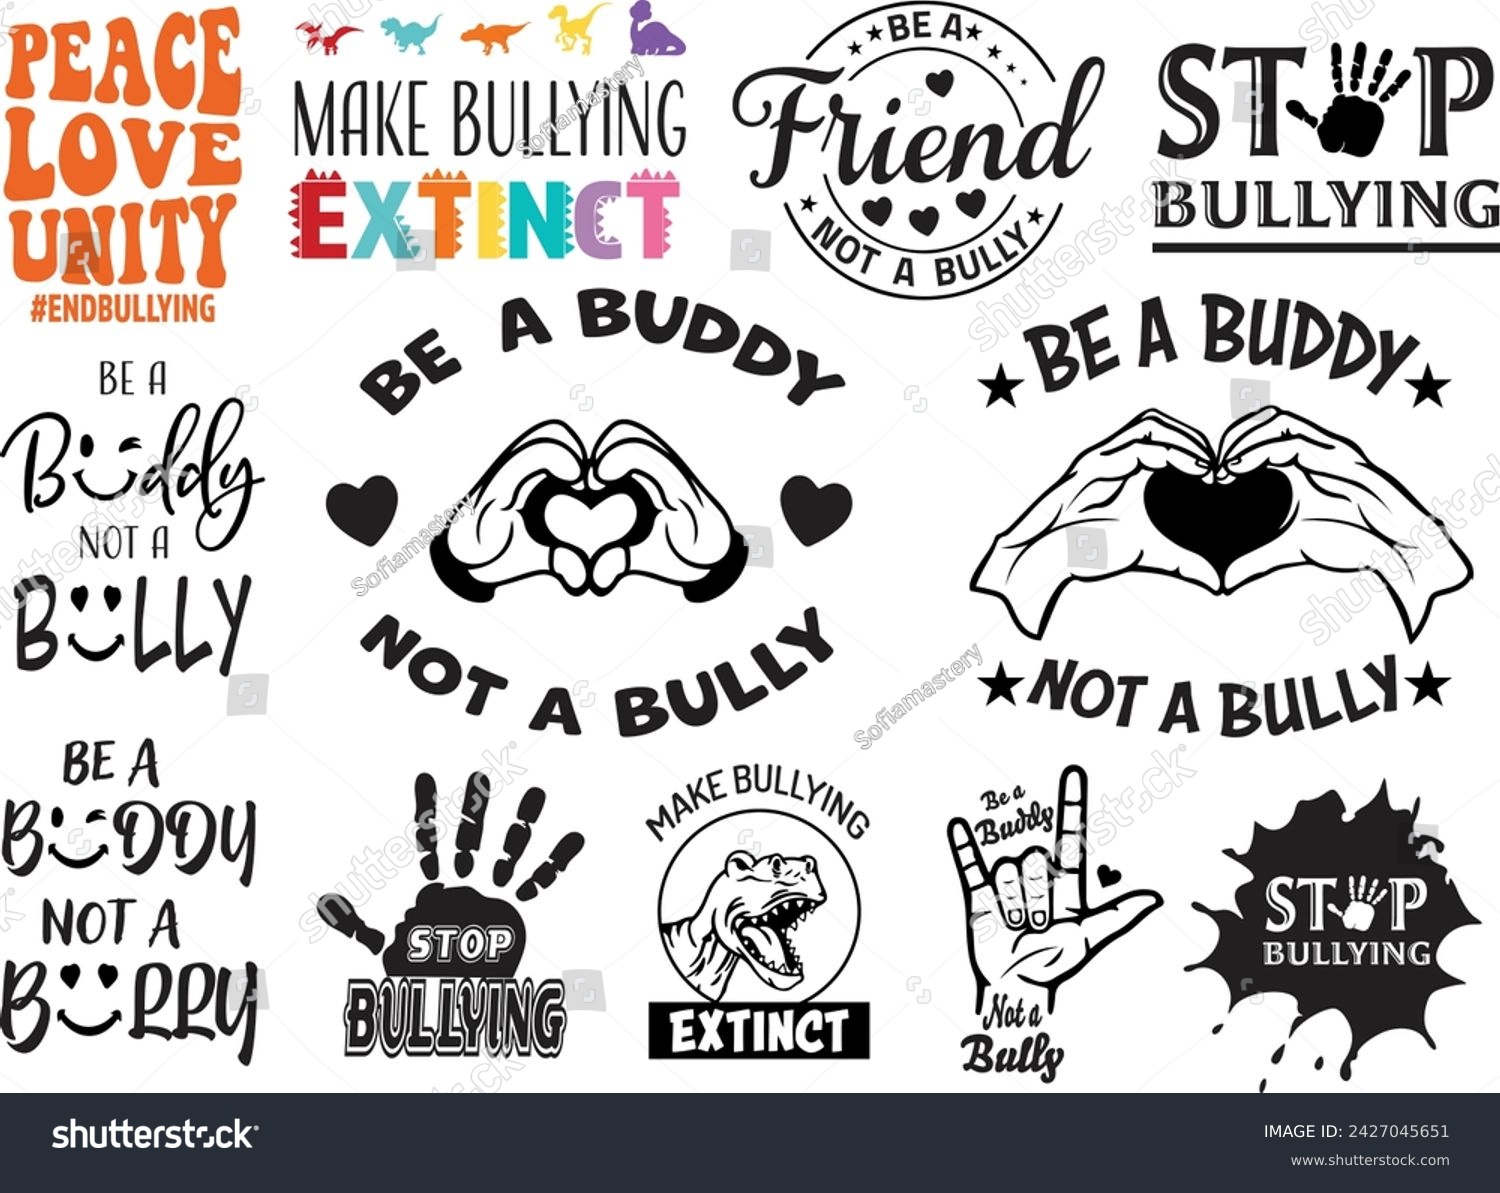 SVG of Make Bullying Extinct Dinosaur, Be a Friend Be A Buddy Not A Bully, peace love unity, Anti-Bullying, Stop Bullying svg